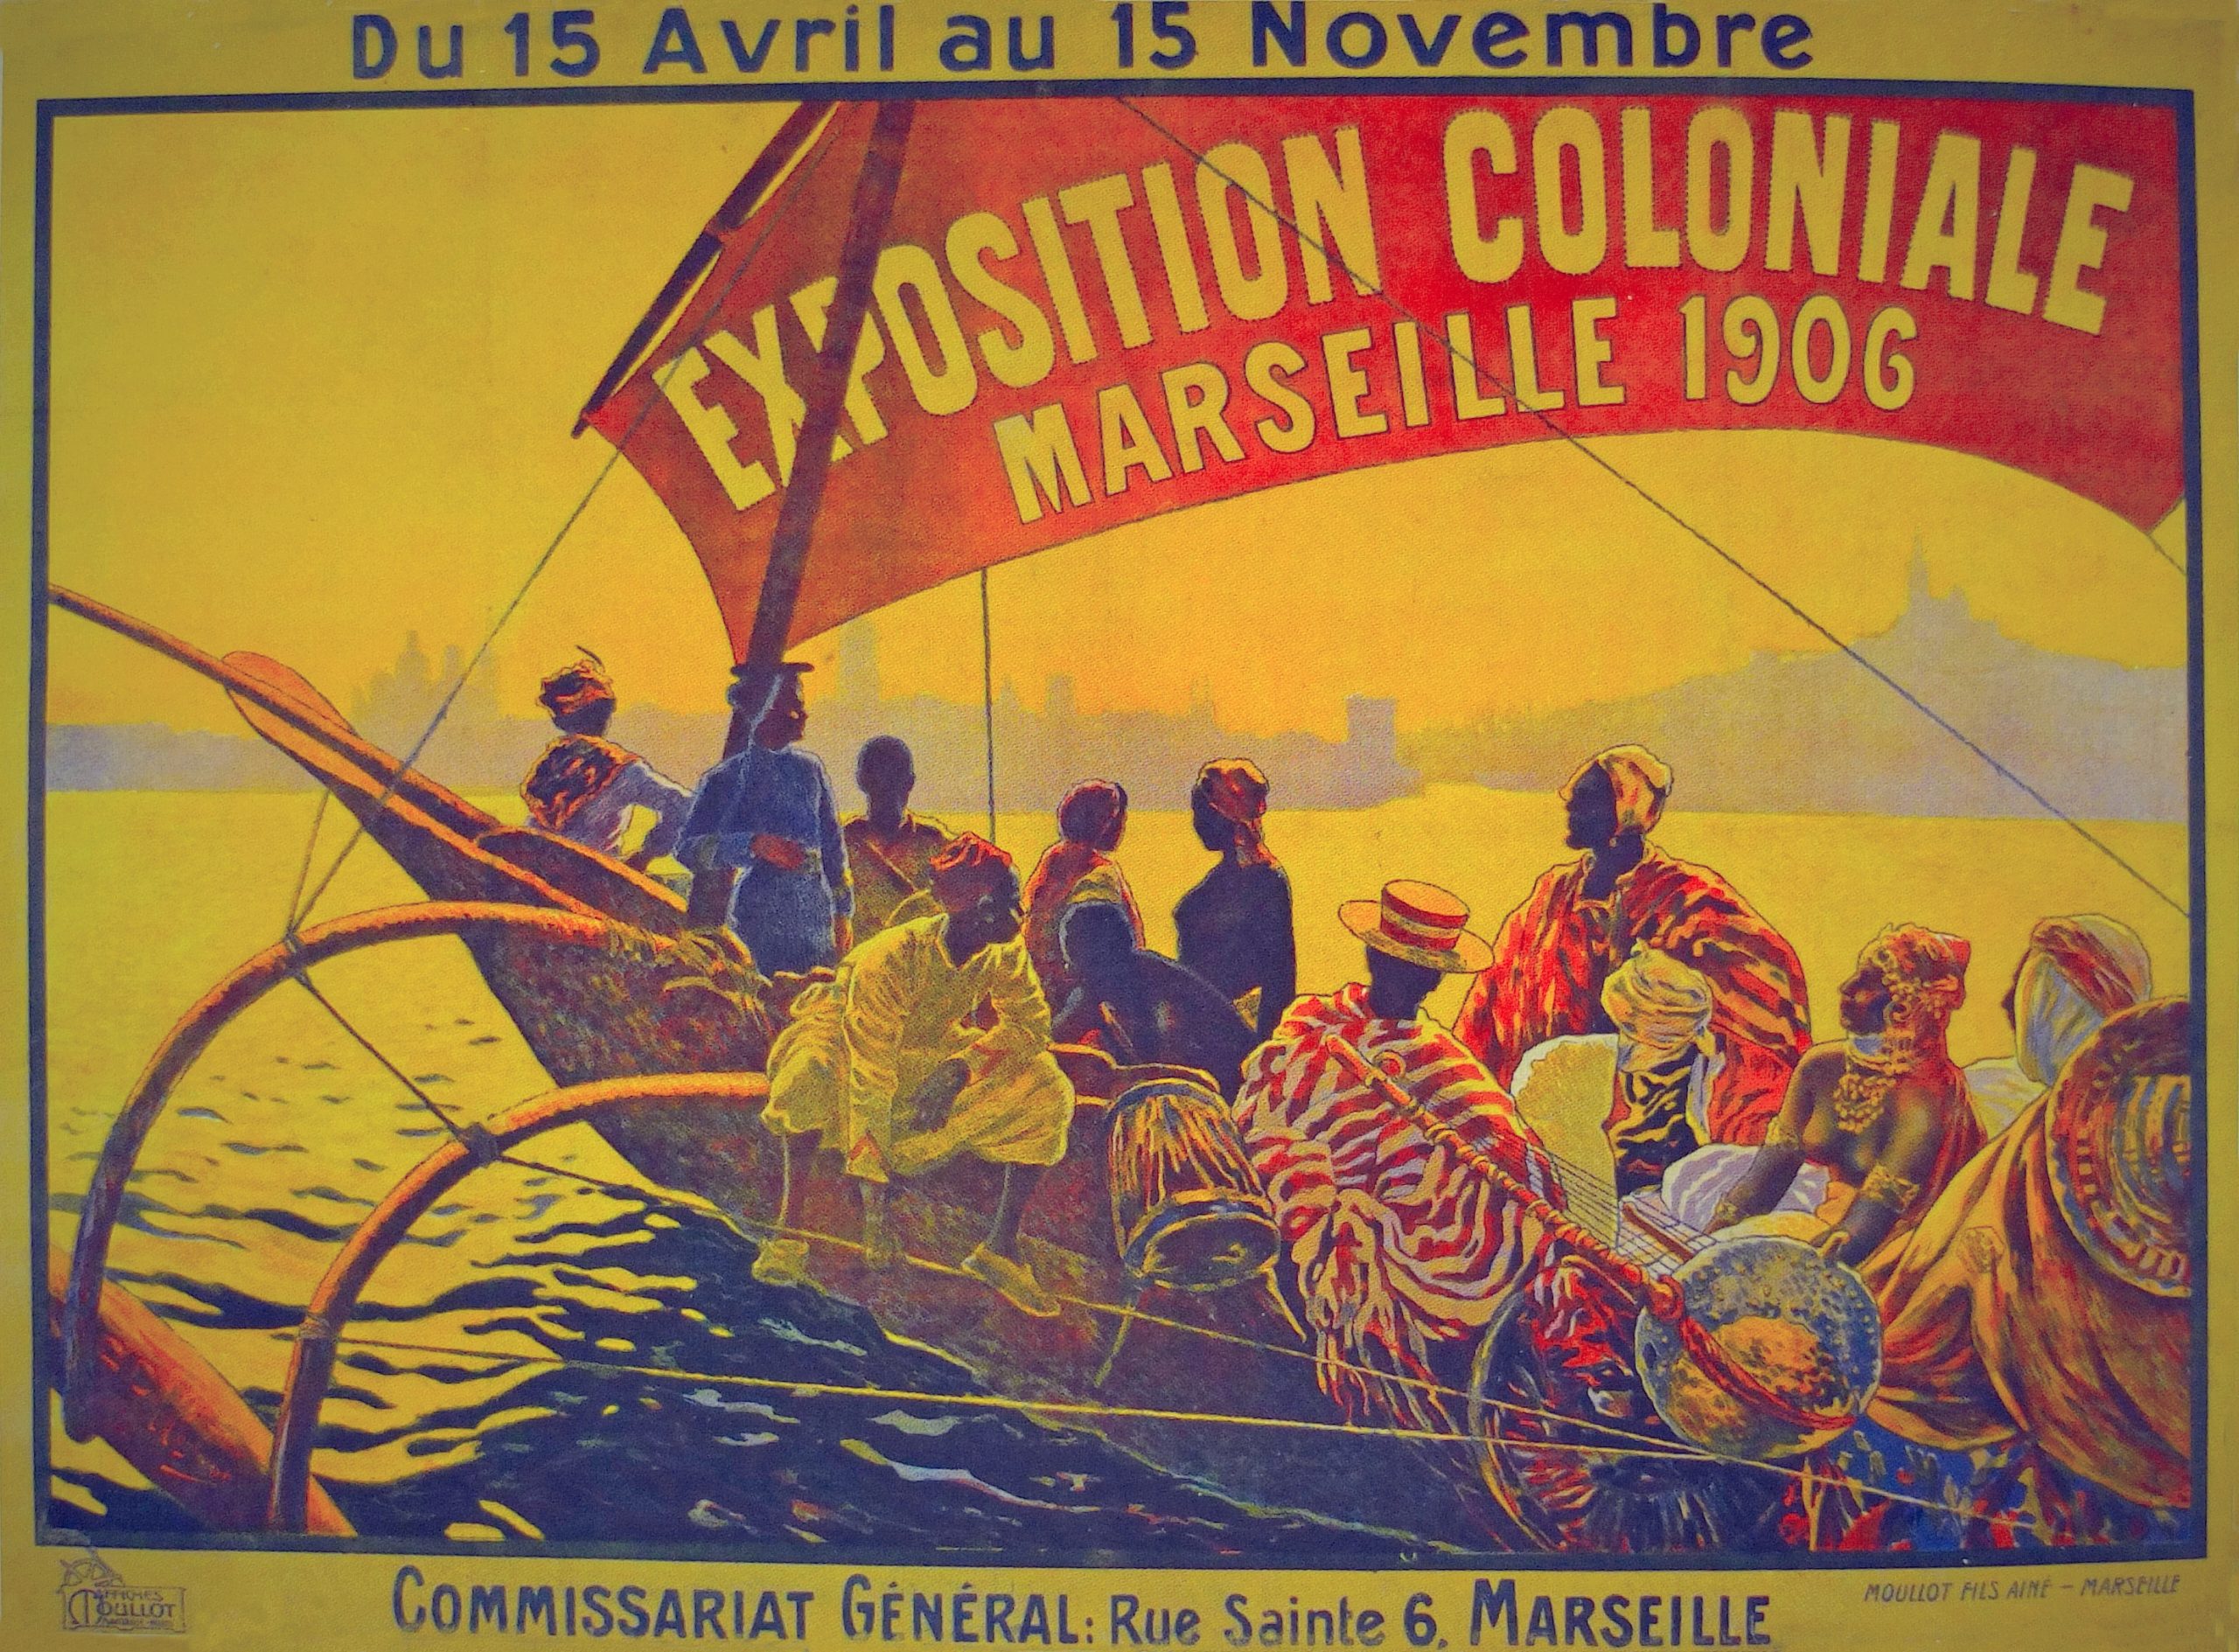 Dellepiane-exposition coloniale Marseille 1906